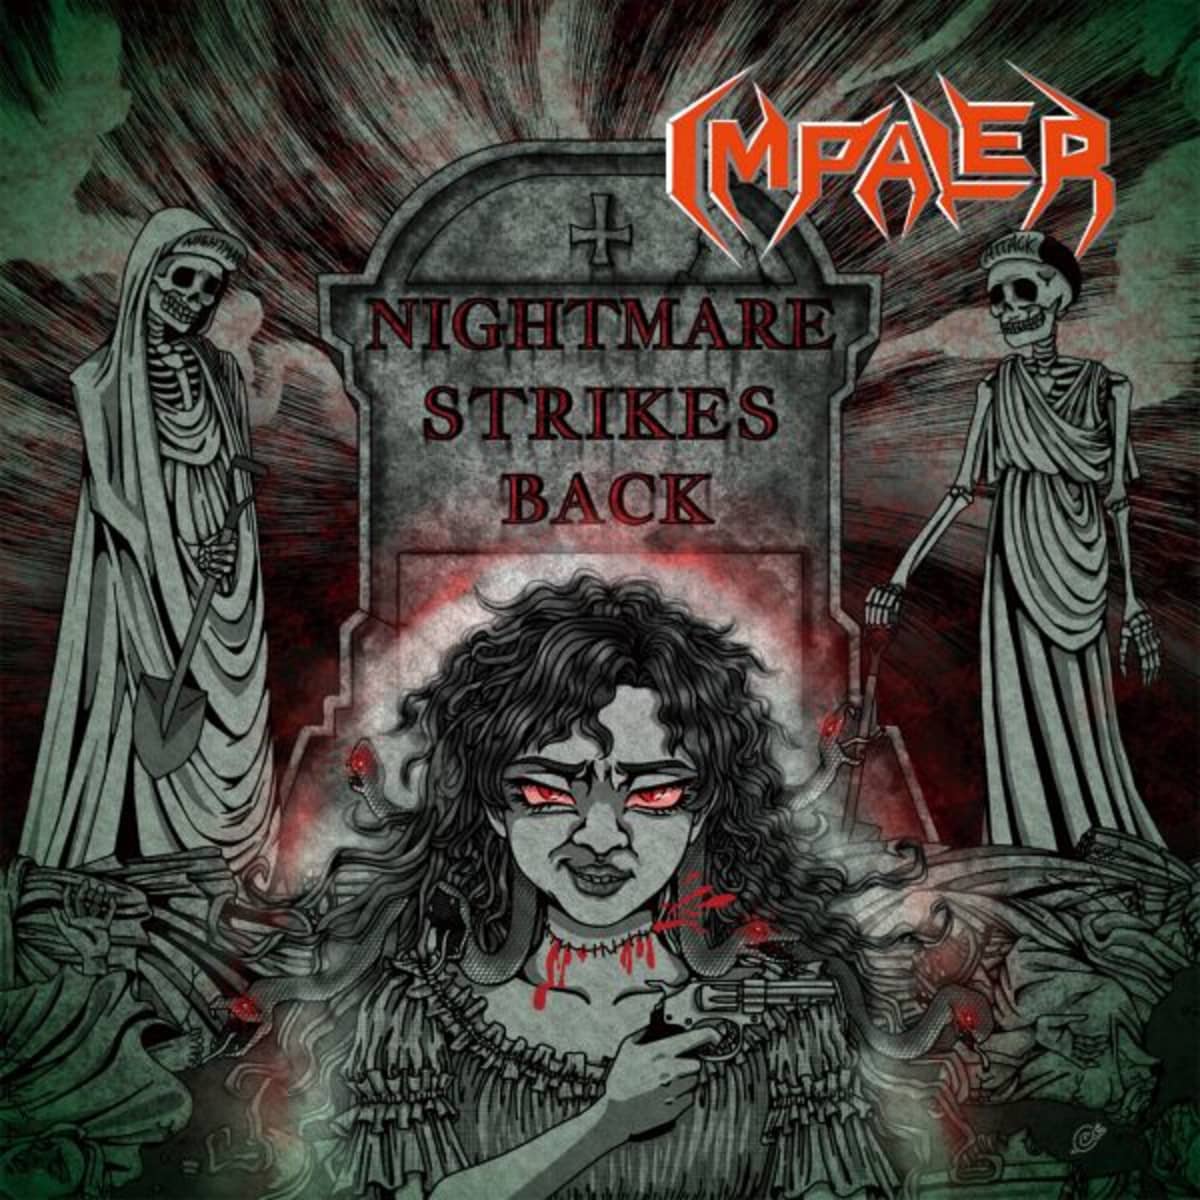 Slayer - Seasons in the abyss  Metal albums, Thrash metal, Album